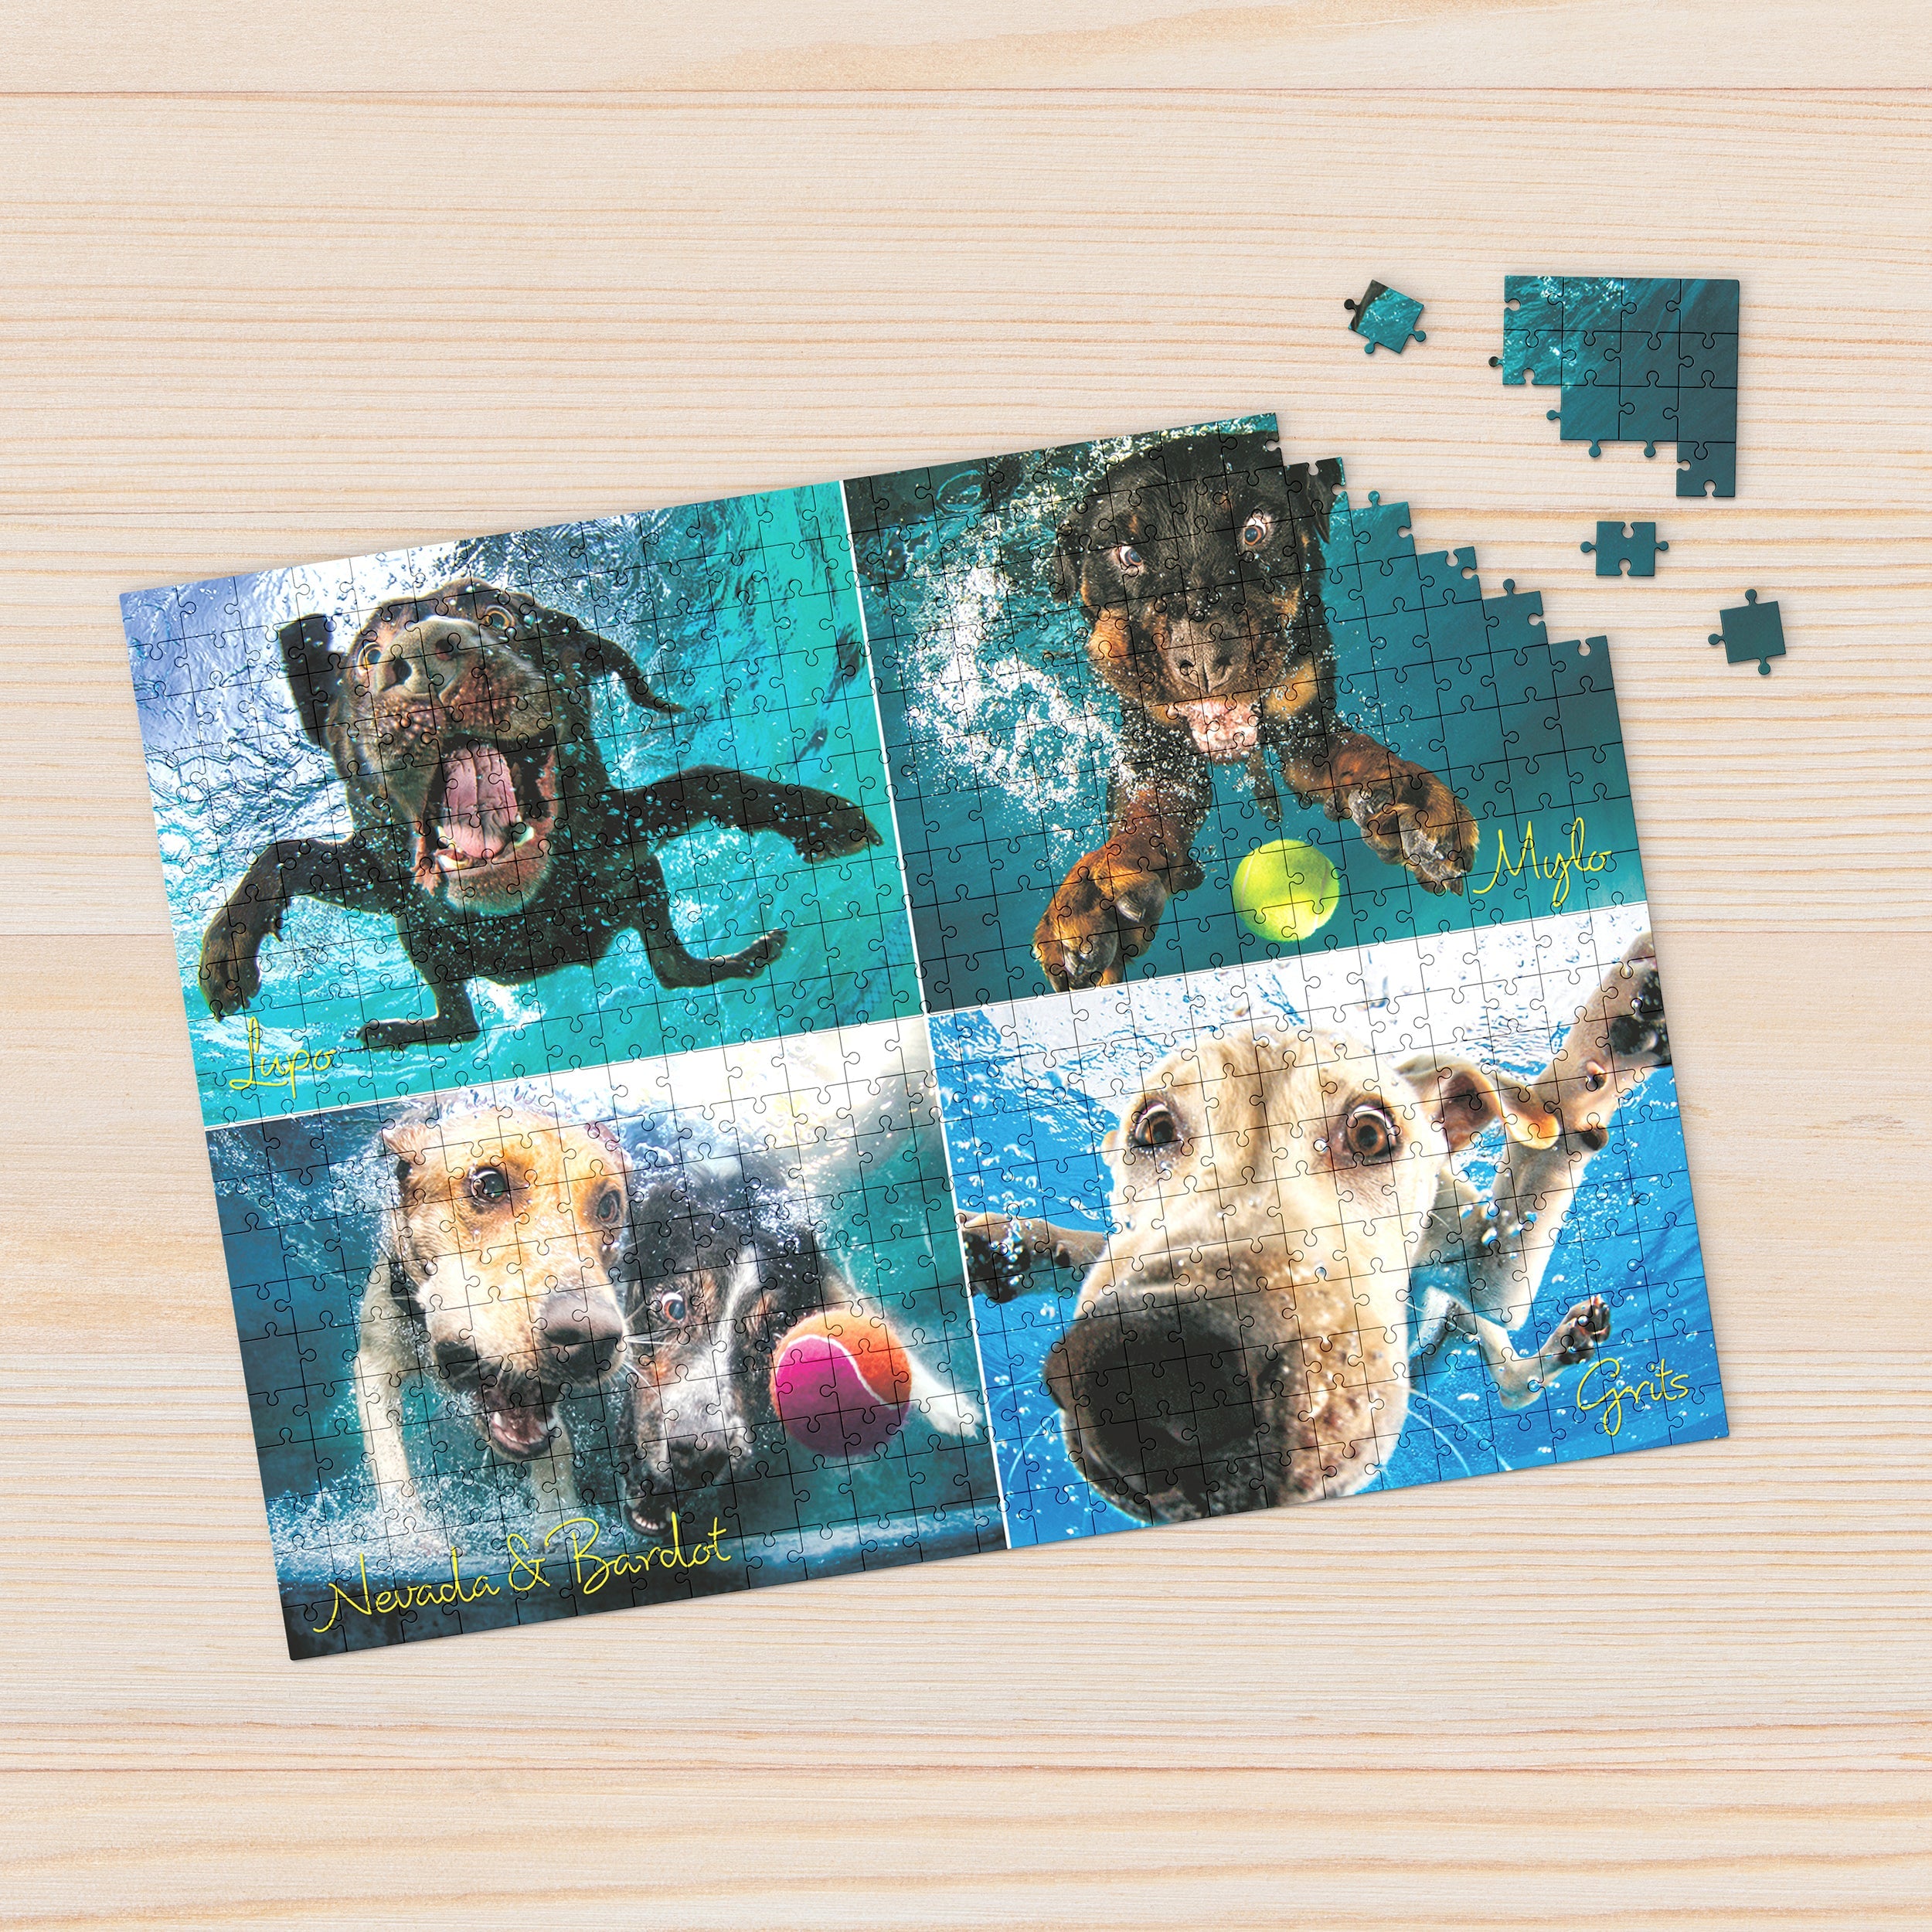 Underwater Dogs: Splash 1000 Piece - Jigsaw Puzzle